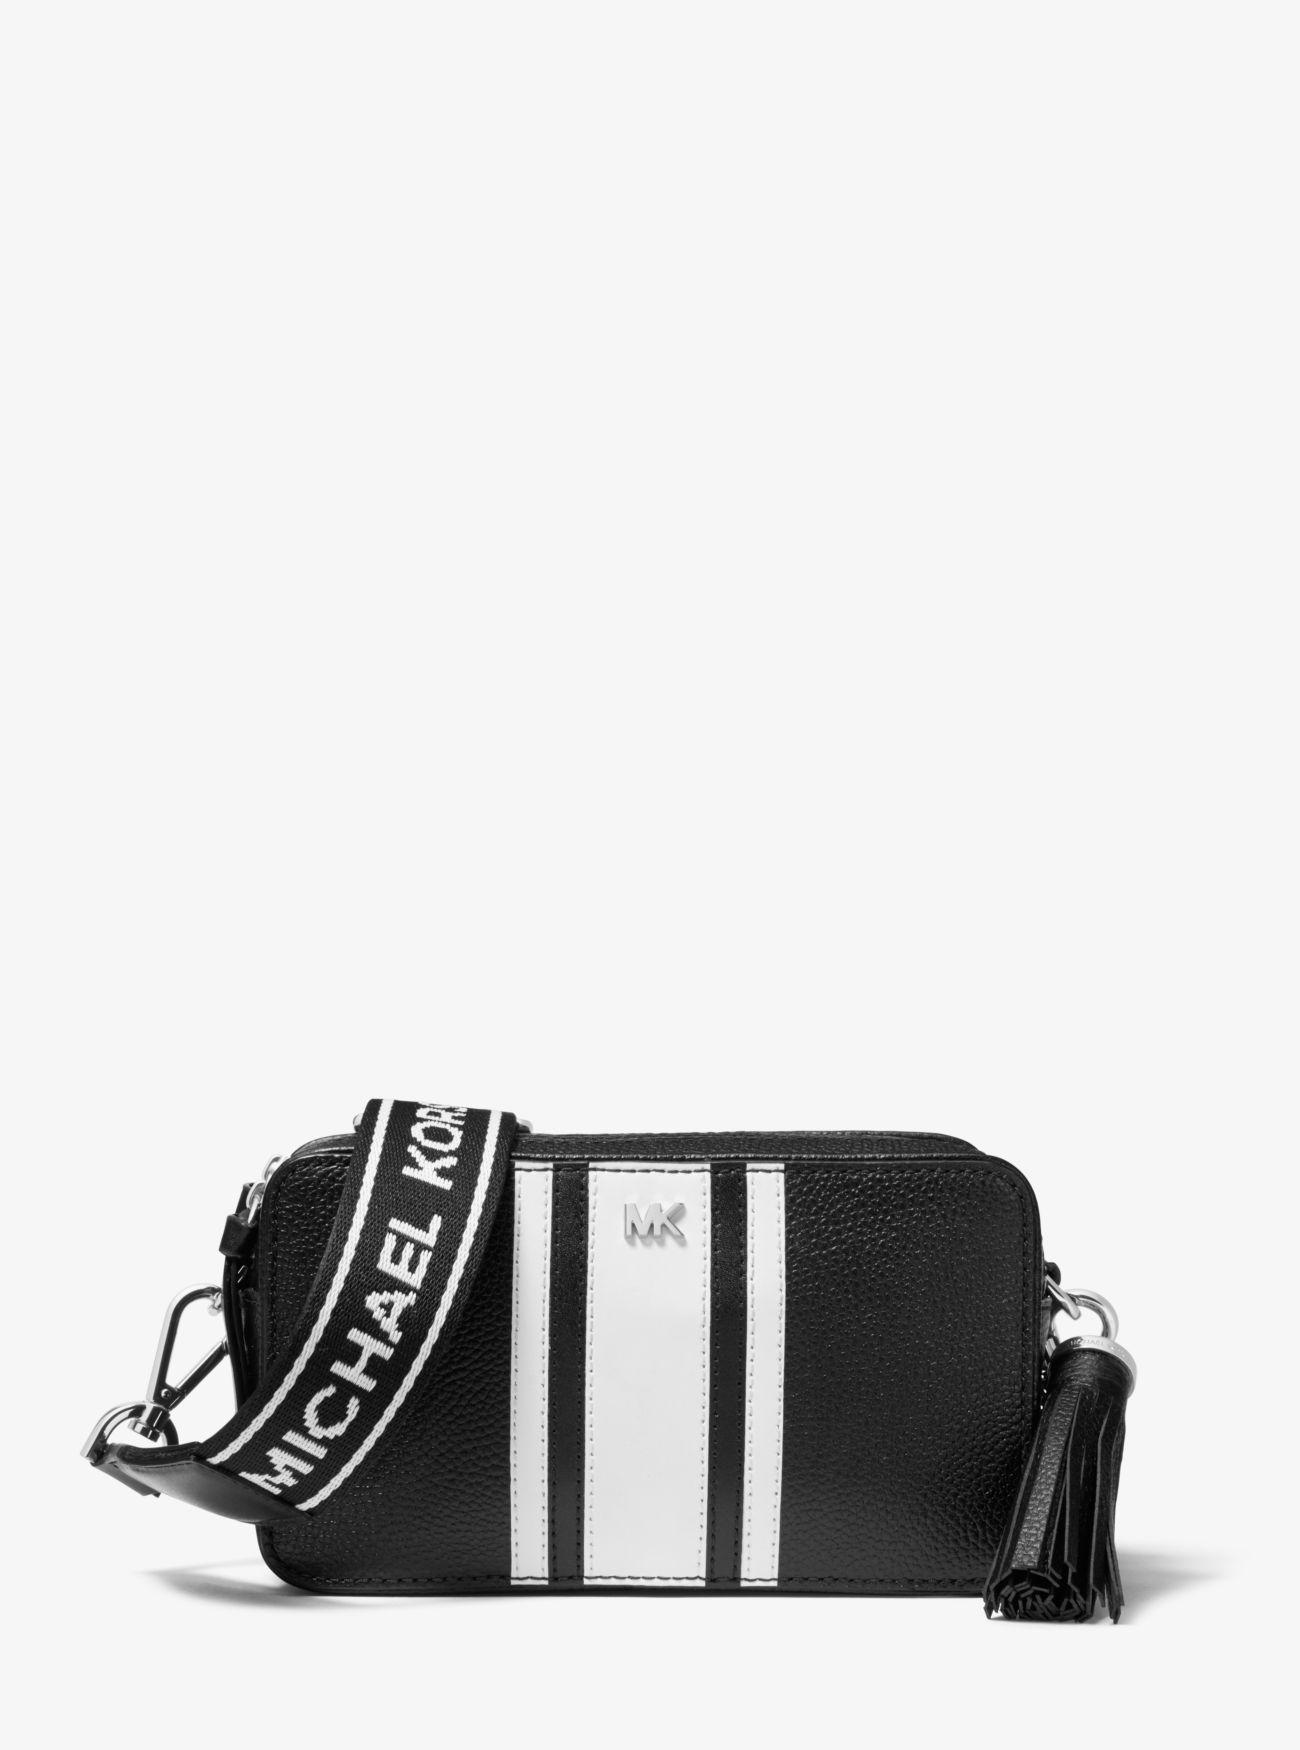 Michael Kors Small Camera Bag Black/optic White | Lyst UK